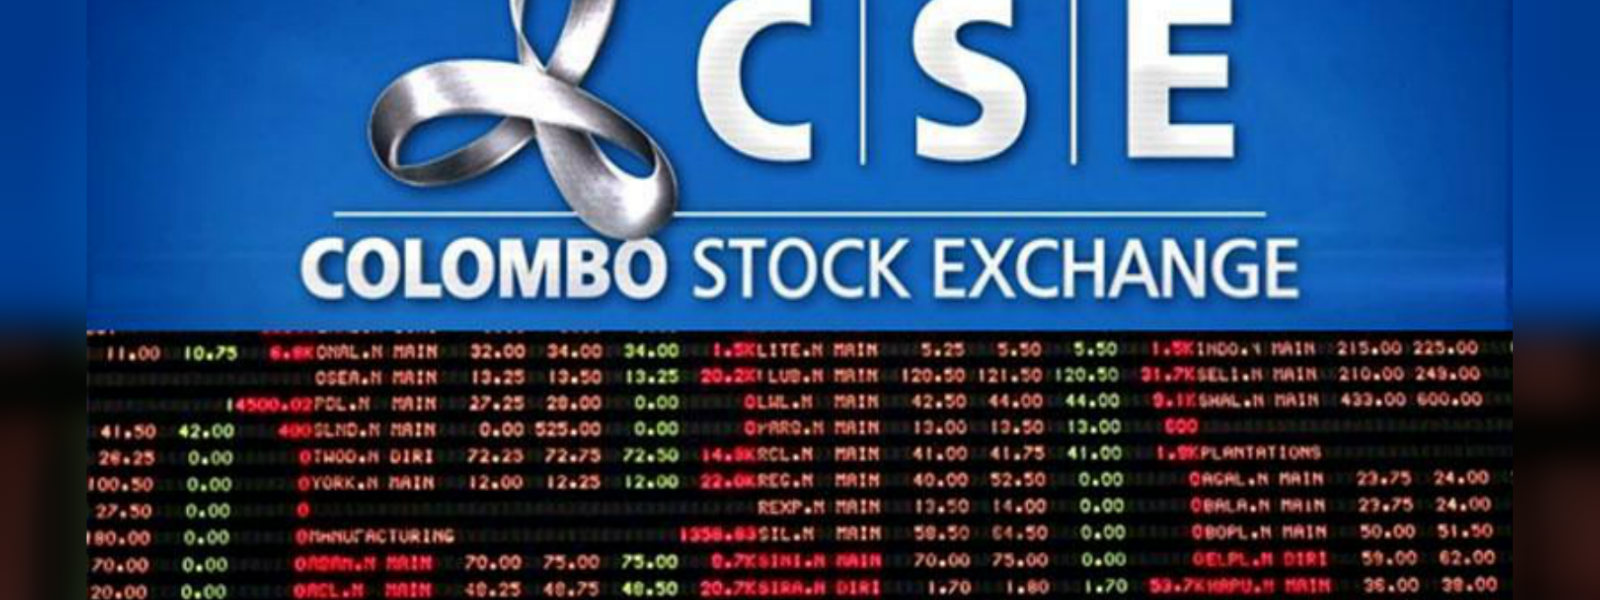 CSE to halt Market at 5% decline